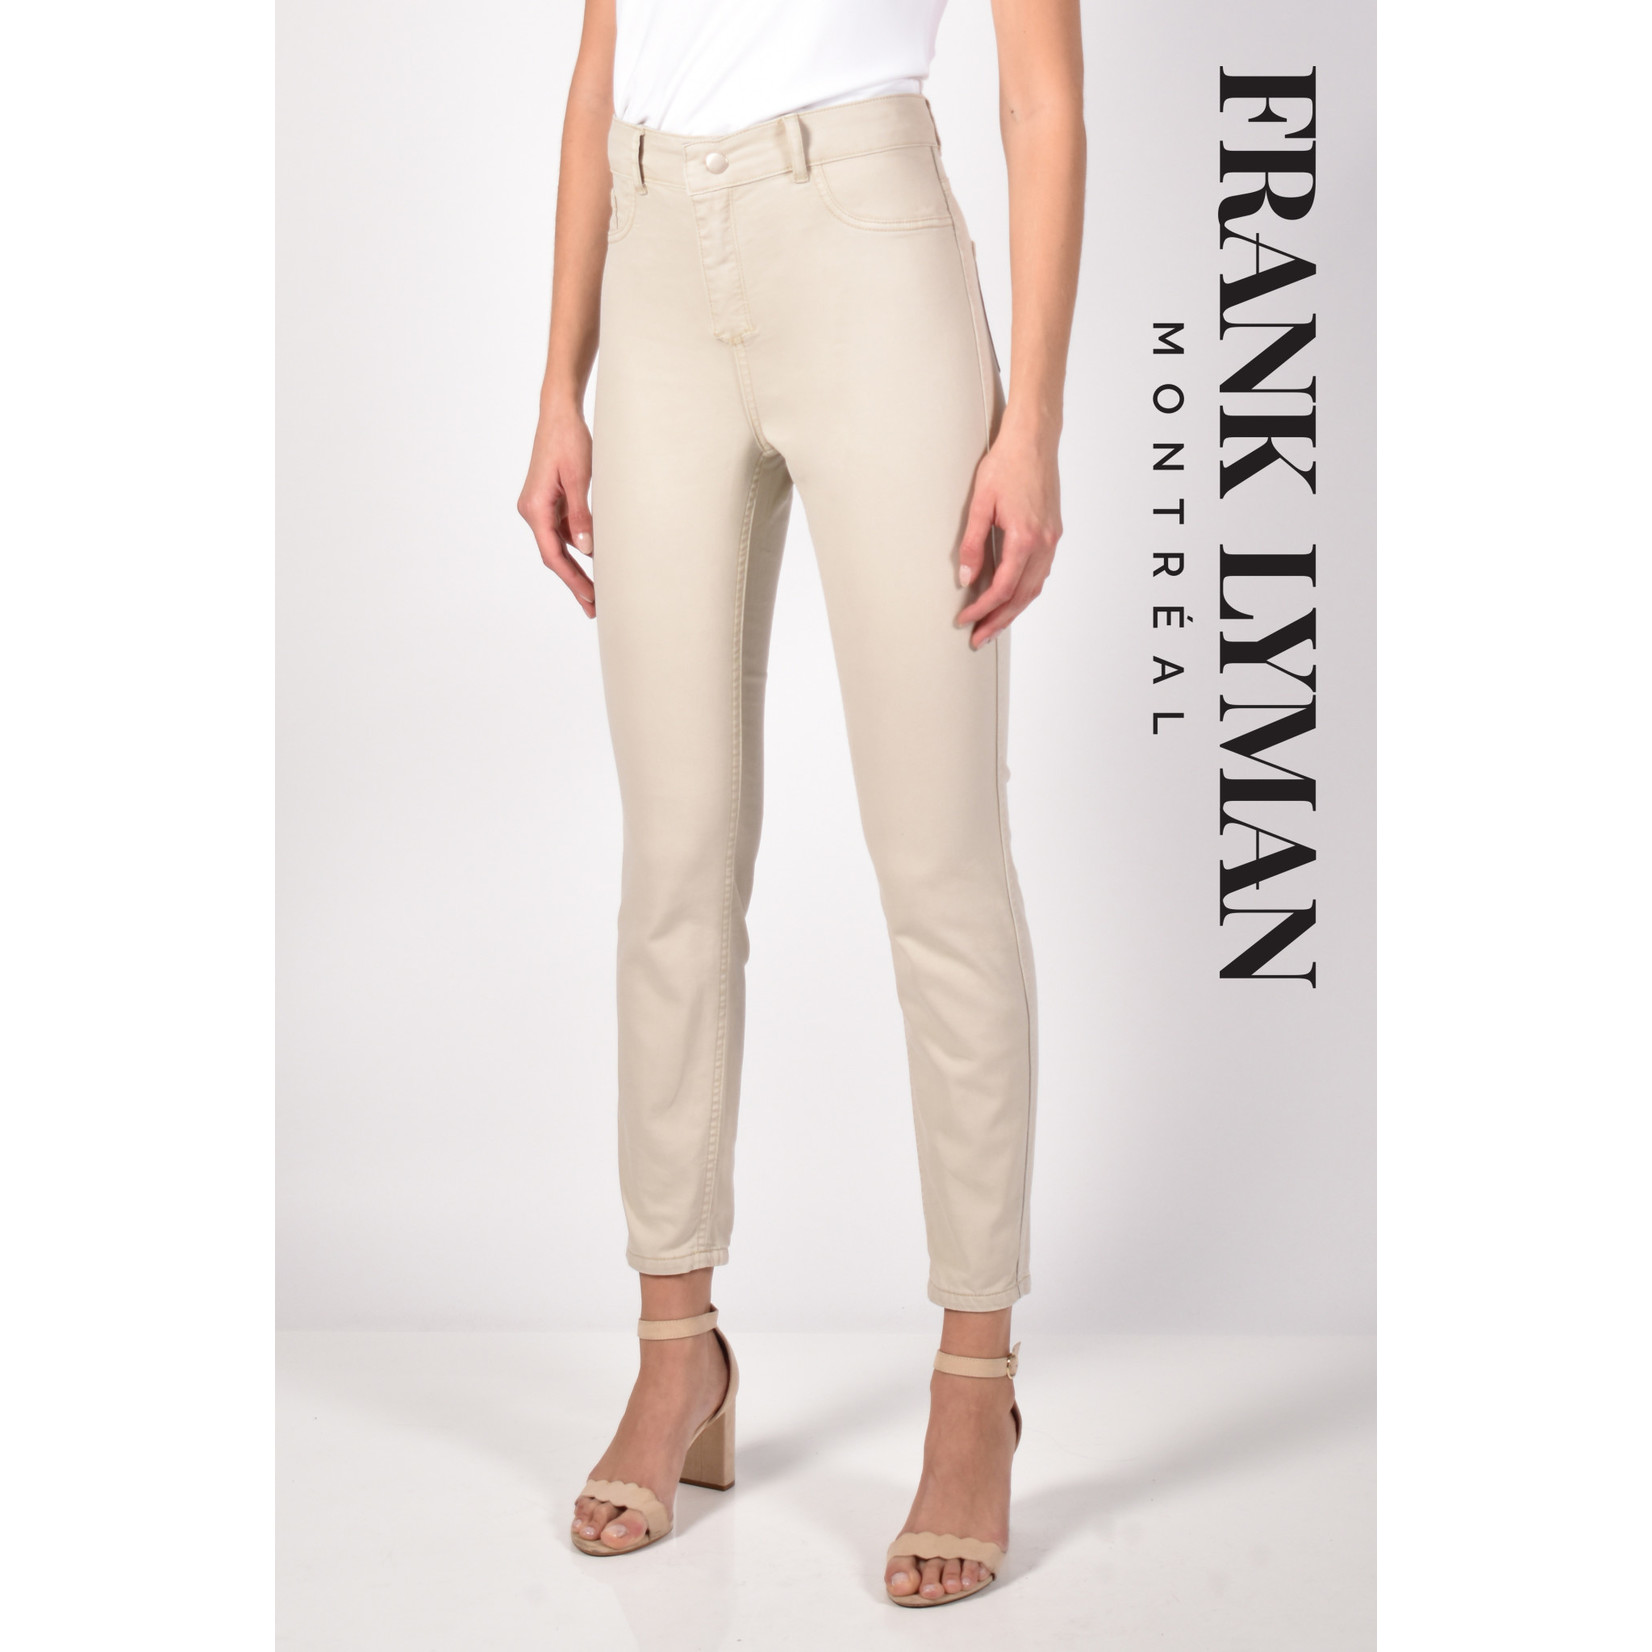 Frank Lyman Floral/Beige Reversible Jean